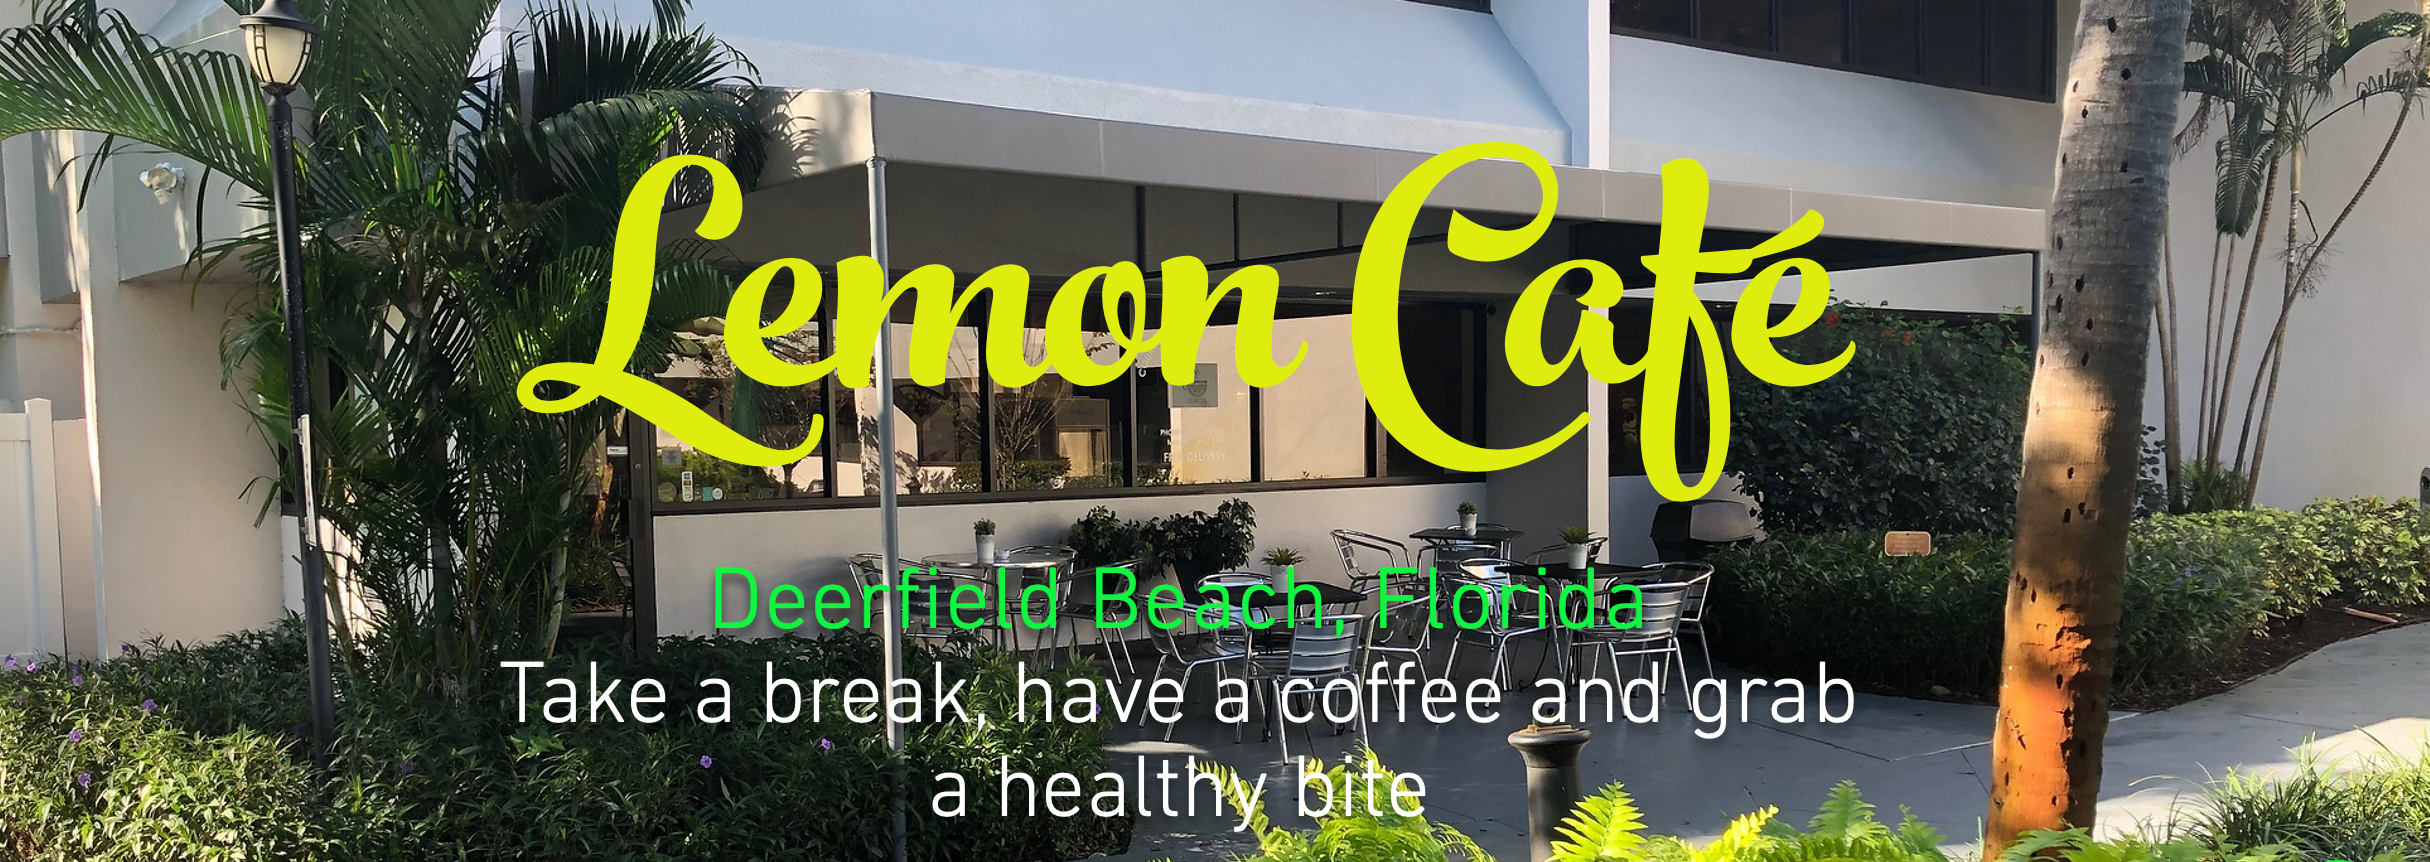 Coffee Shops Deerfield Beach FL | Breakfast Deerfield Beach Florida - Leman Cafe